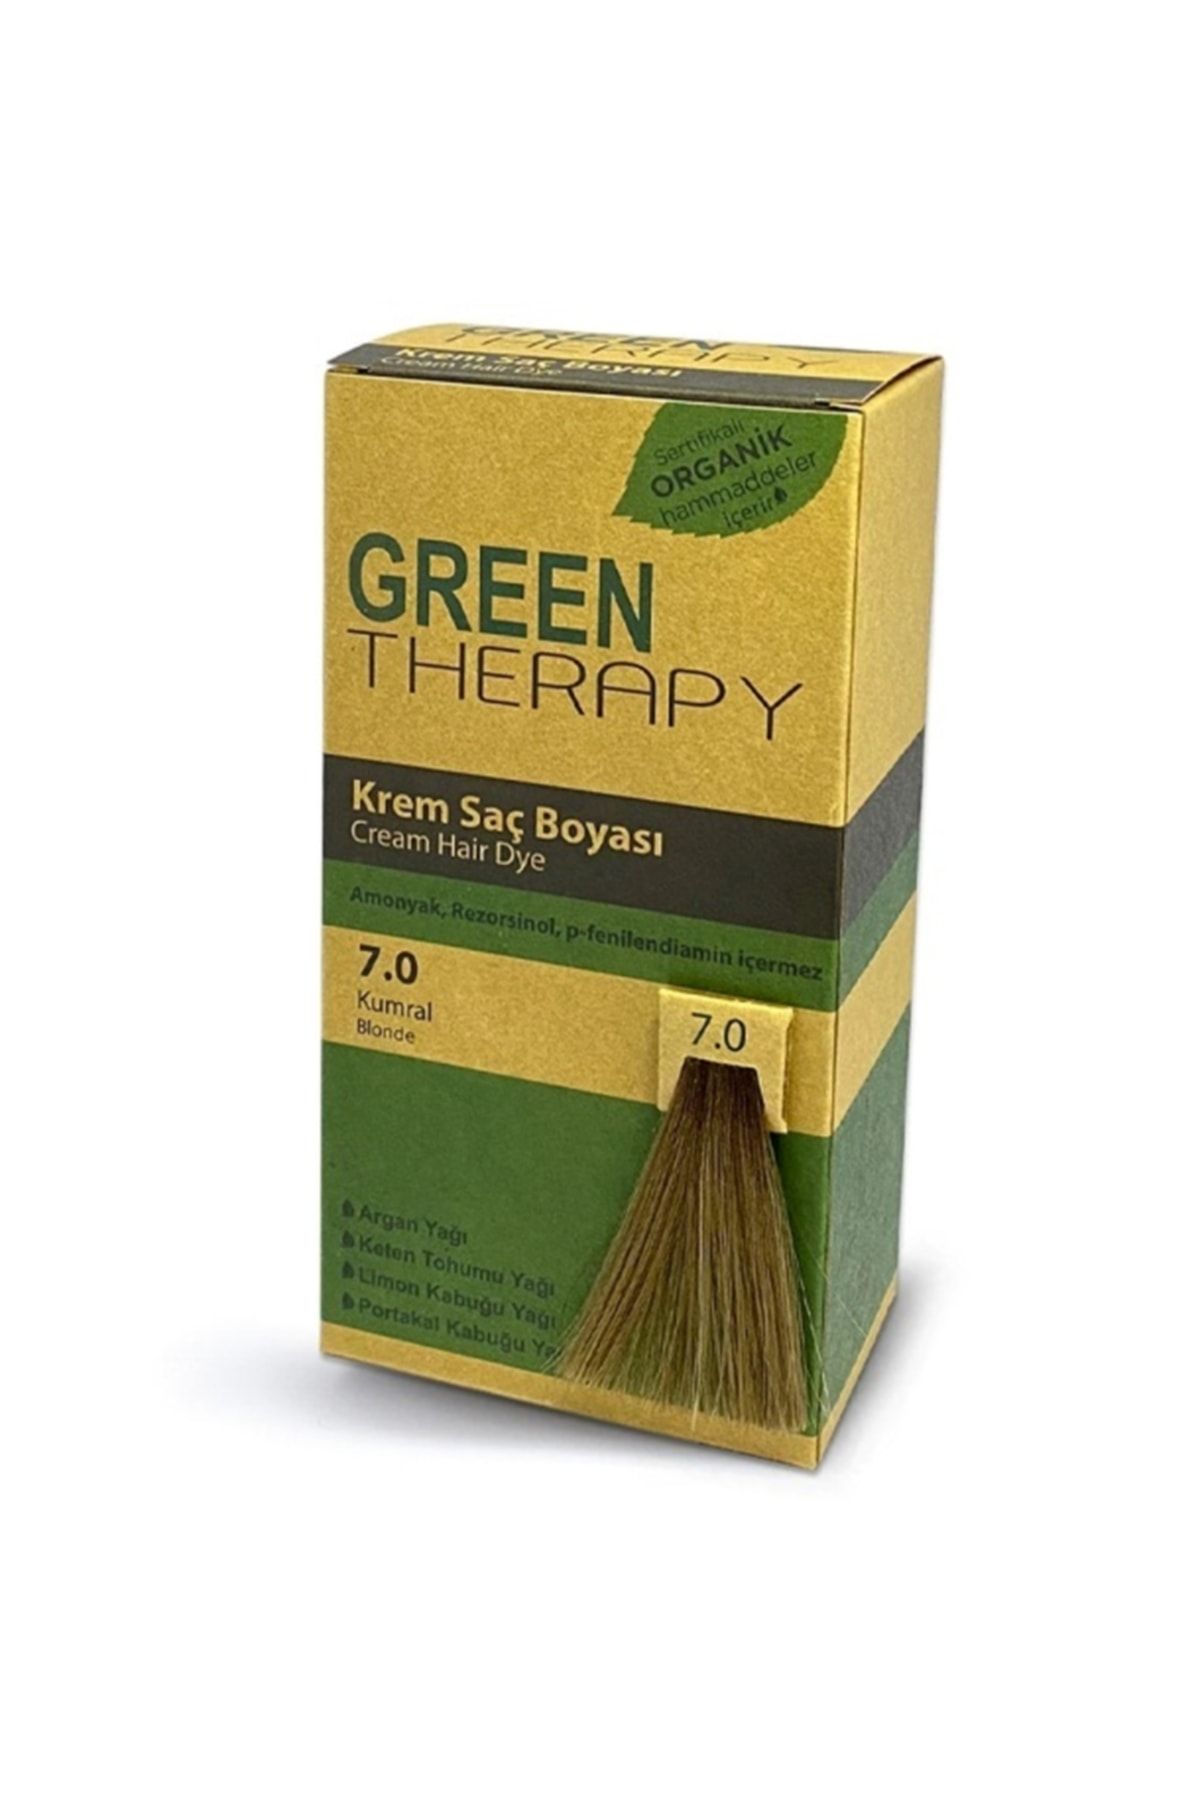 Green Therapy Krem Saç Boyası 7.0 Kumral